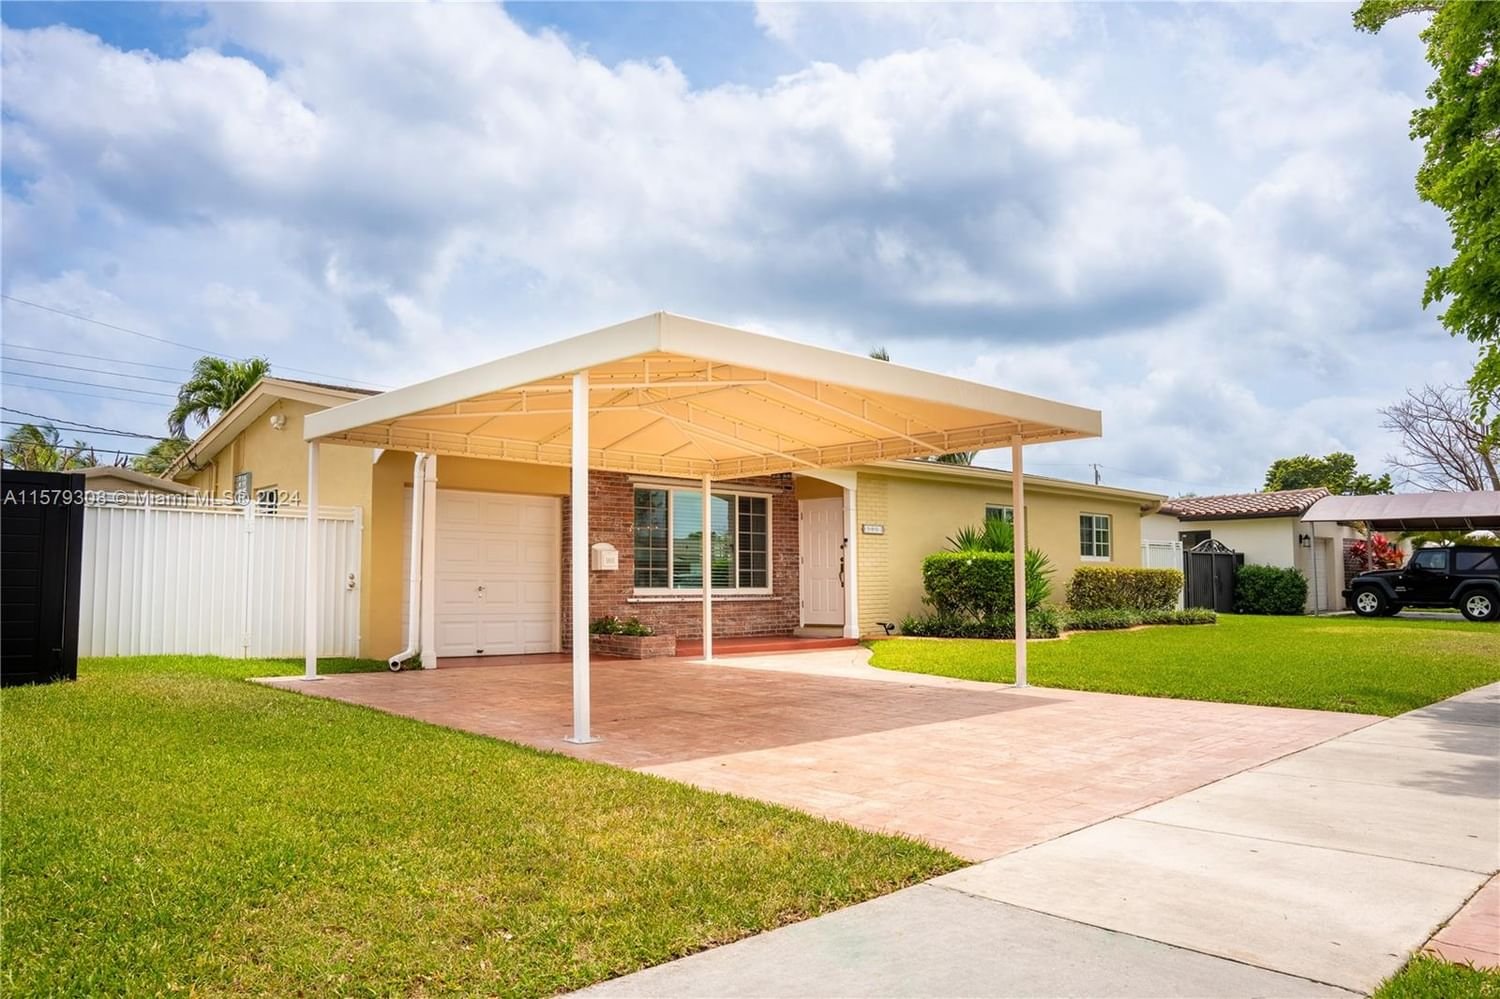 Real estate property located at 5801 94 place, Miami-Dade County, DARLINGTON MANOR, Miami, FL